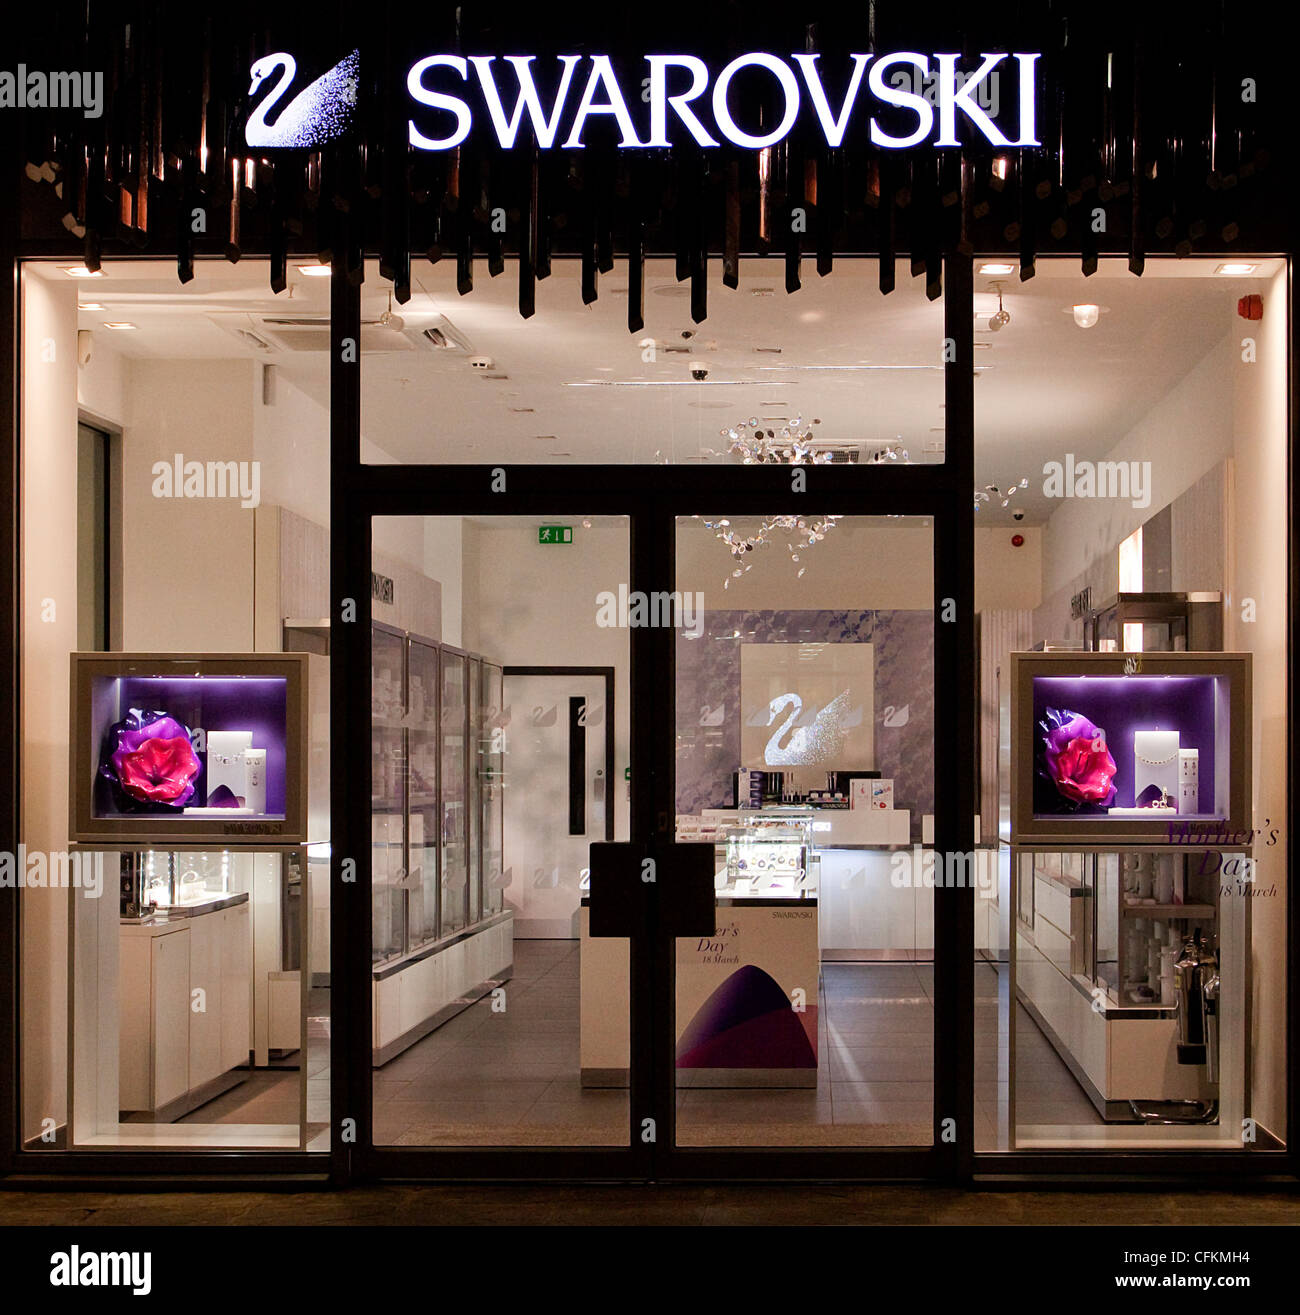 Swarovski window hi-res stock photography and images - Alamy